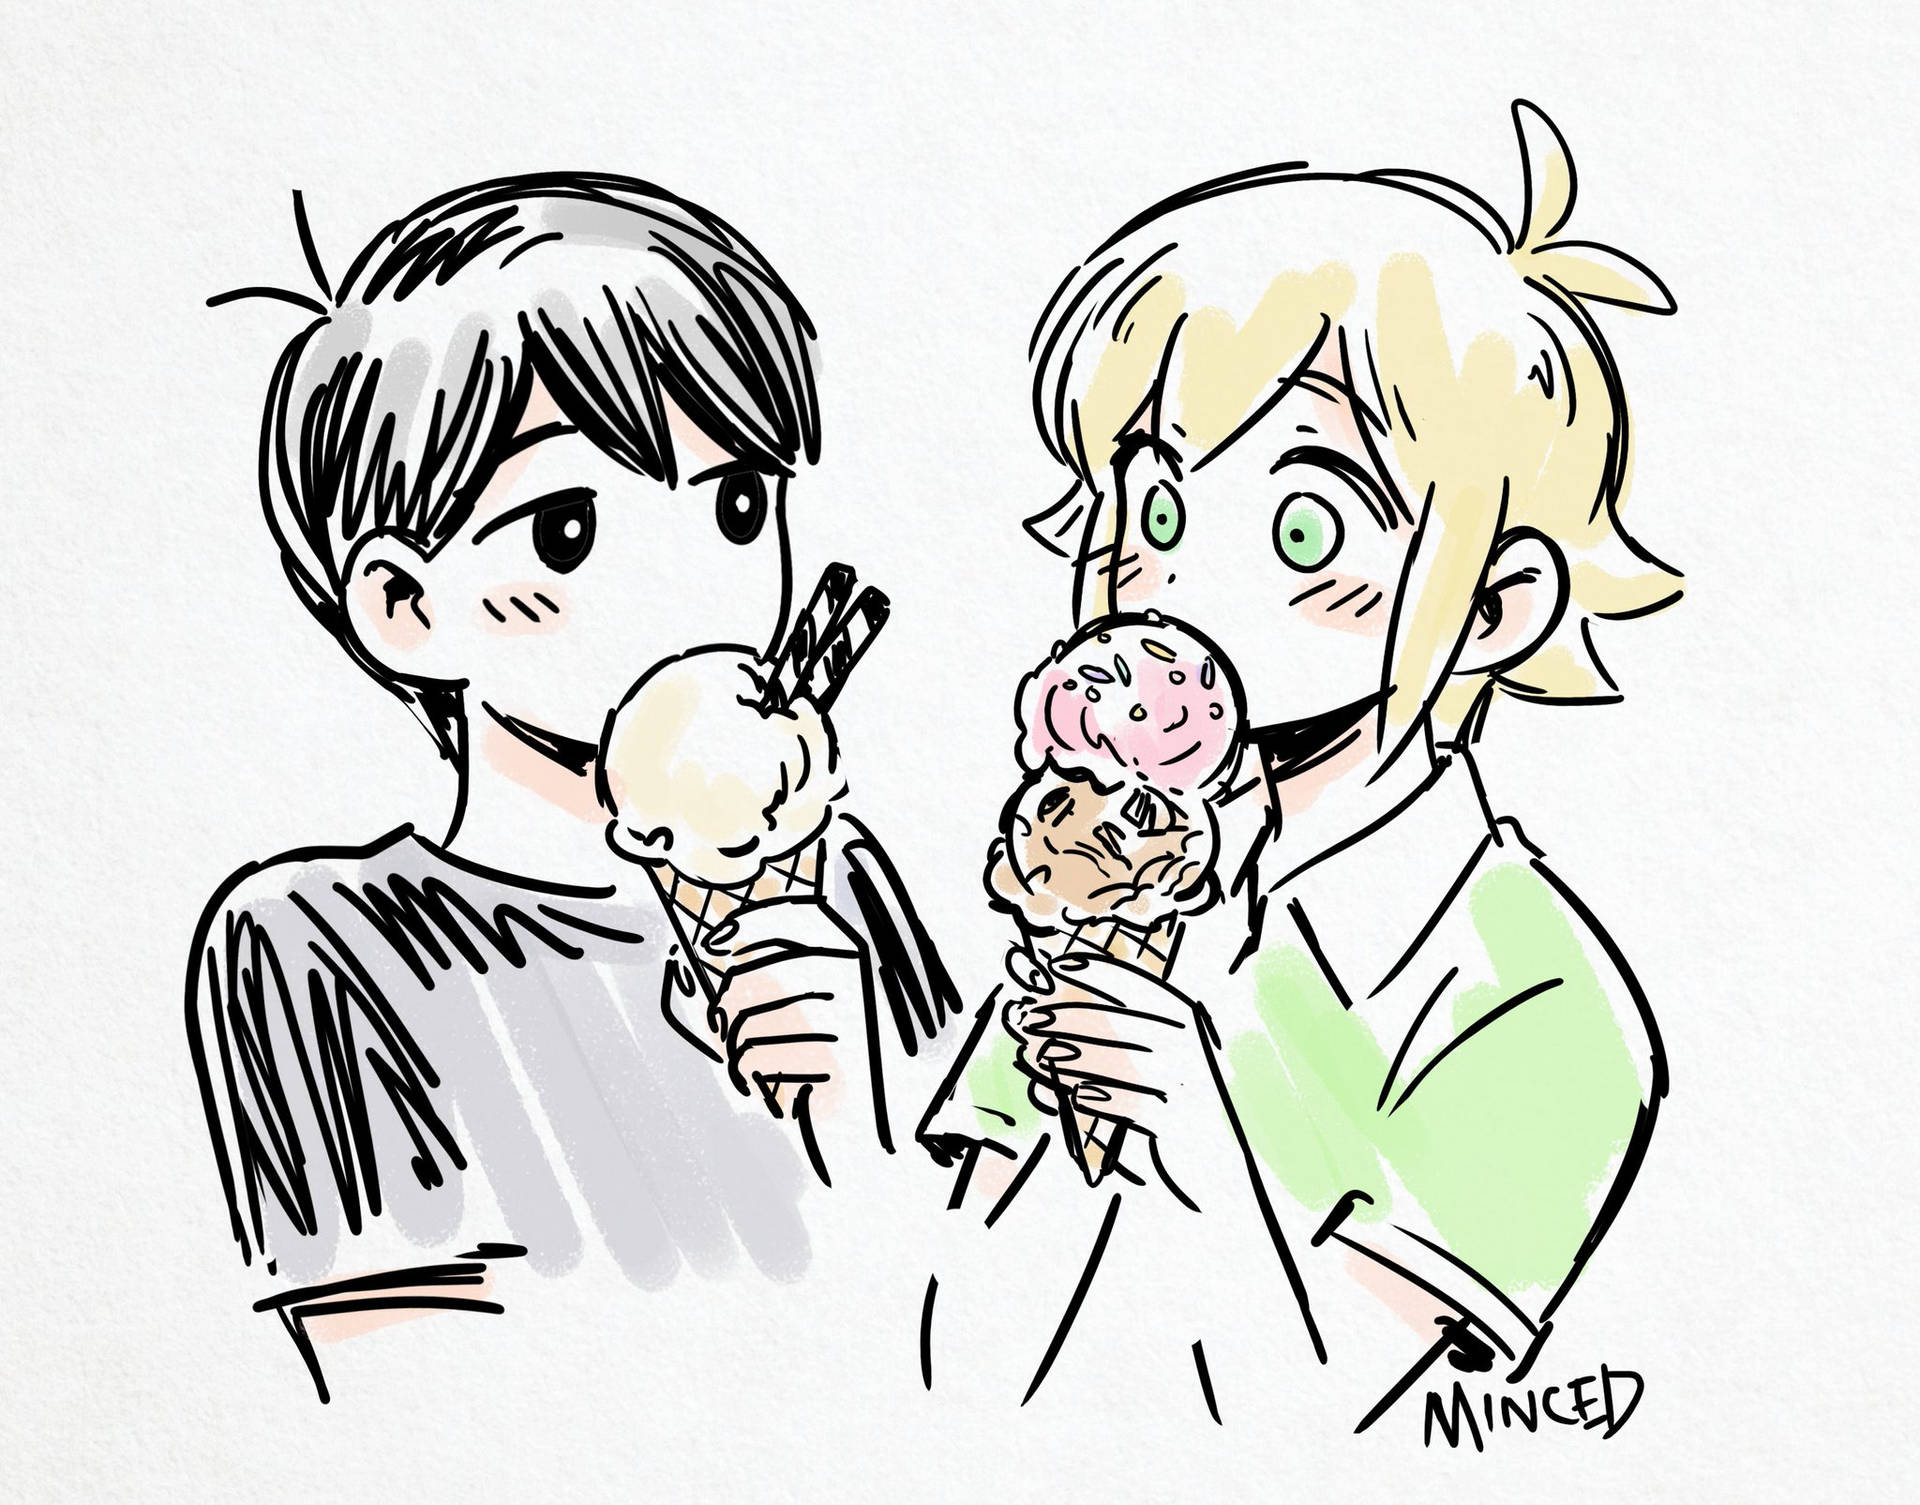 Omori Eating Ice Cream Together Background